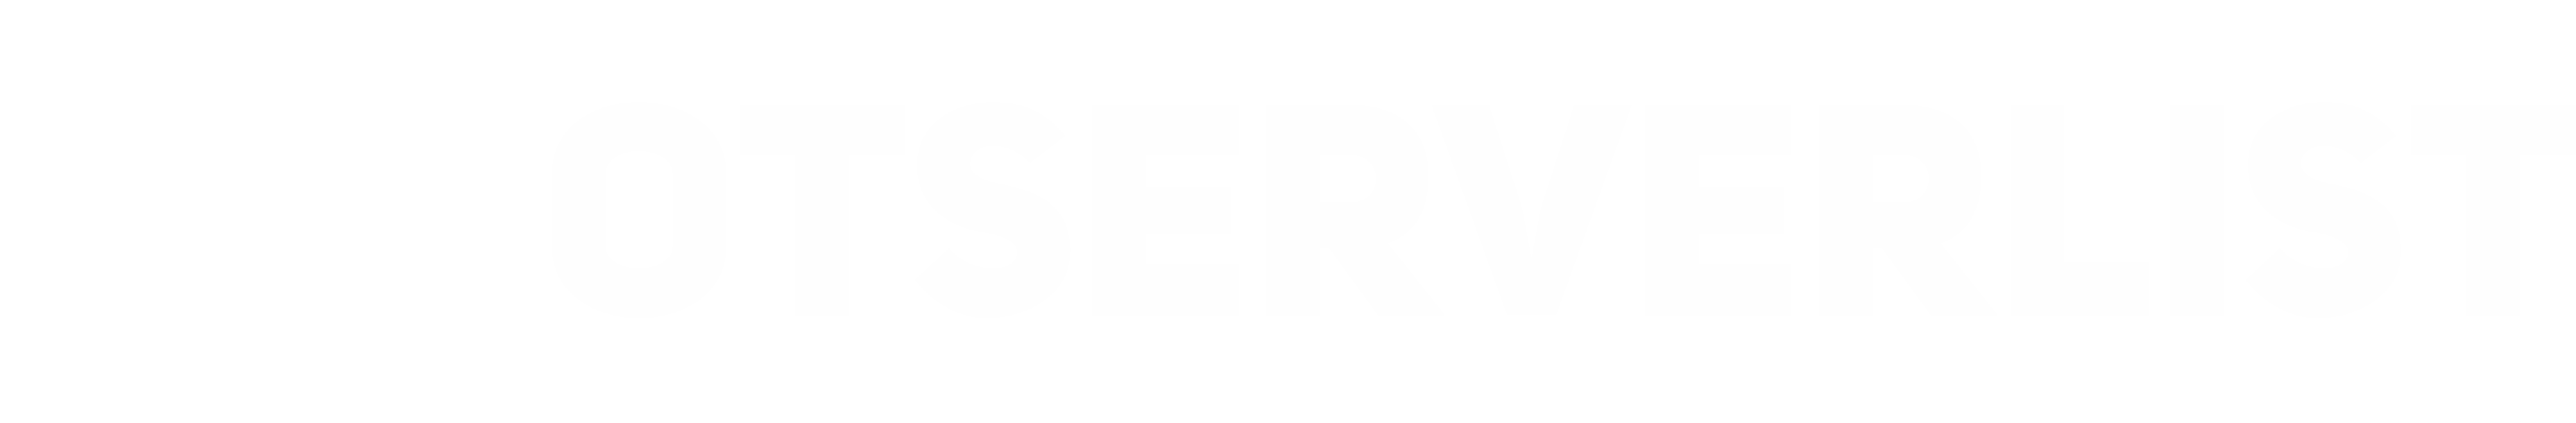 Ot server list logo